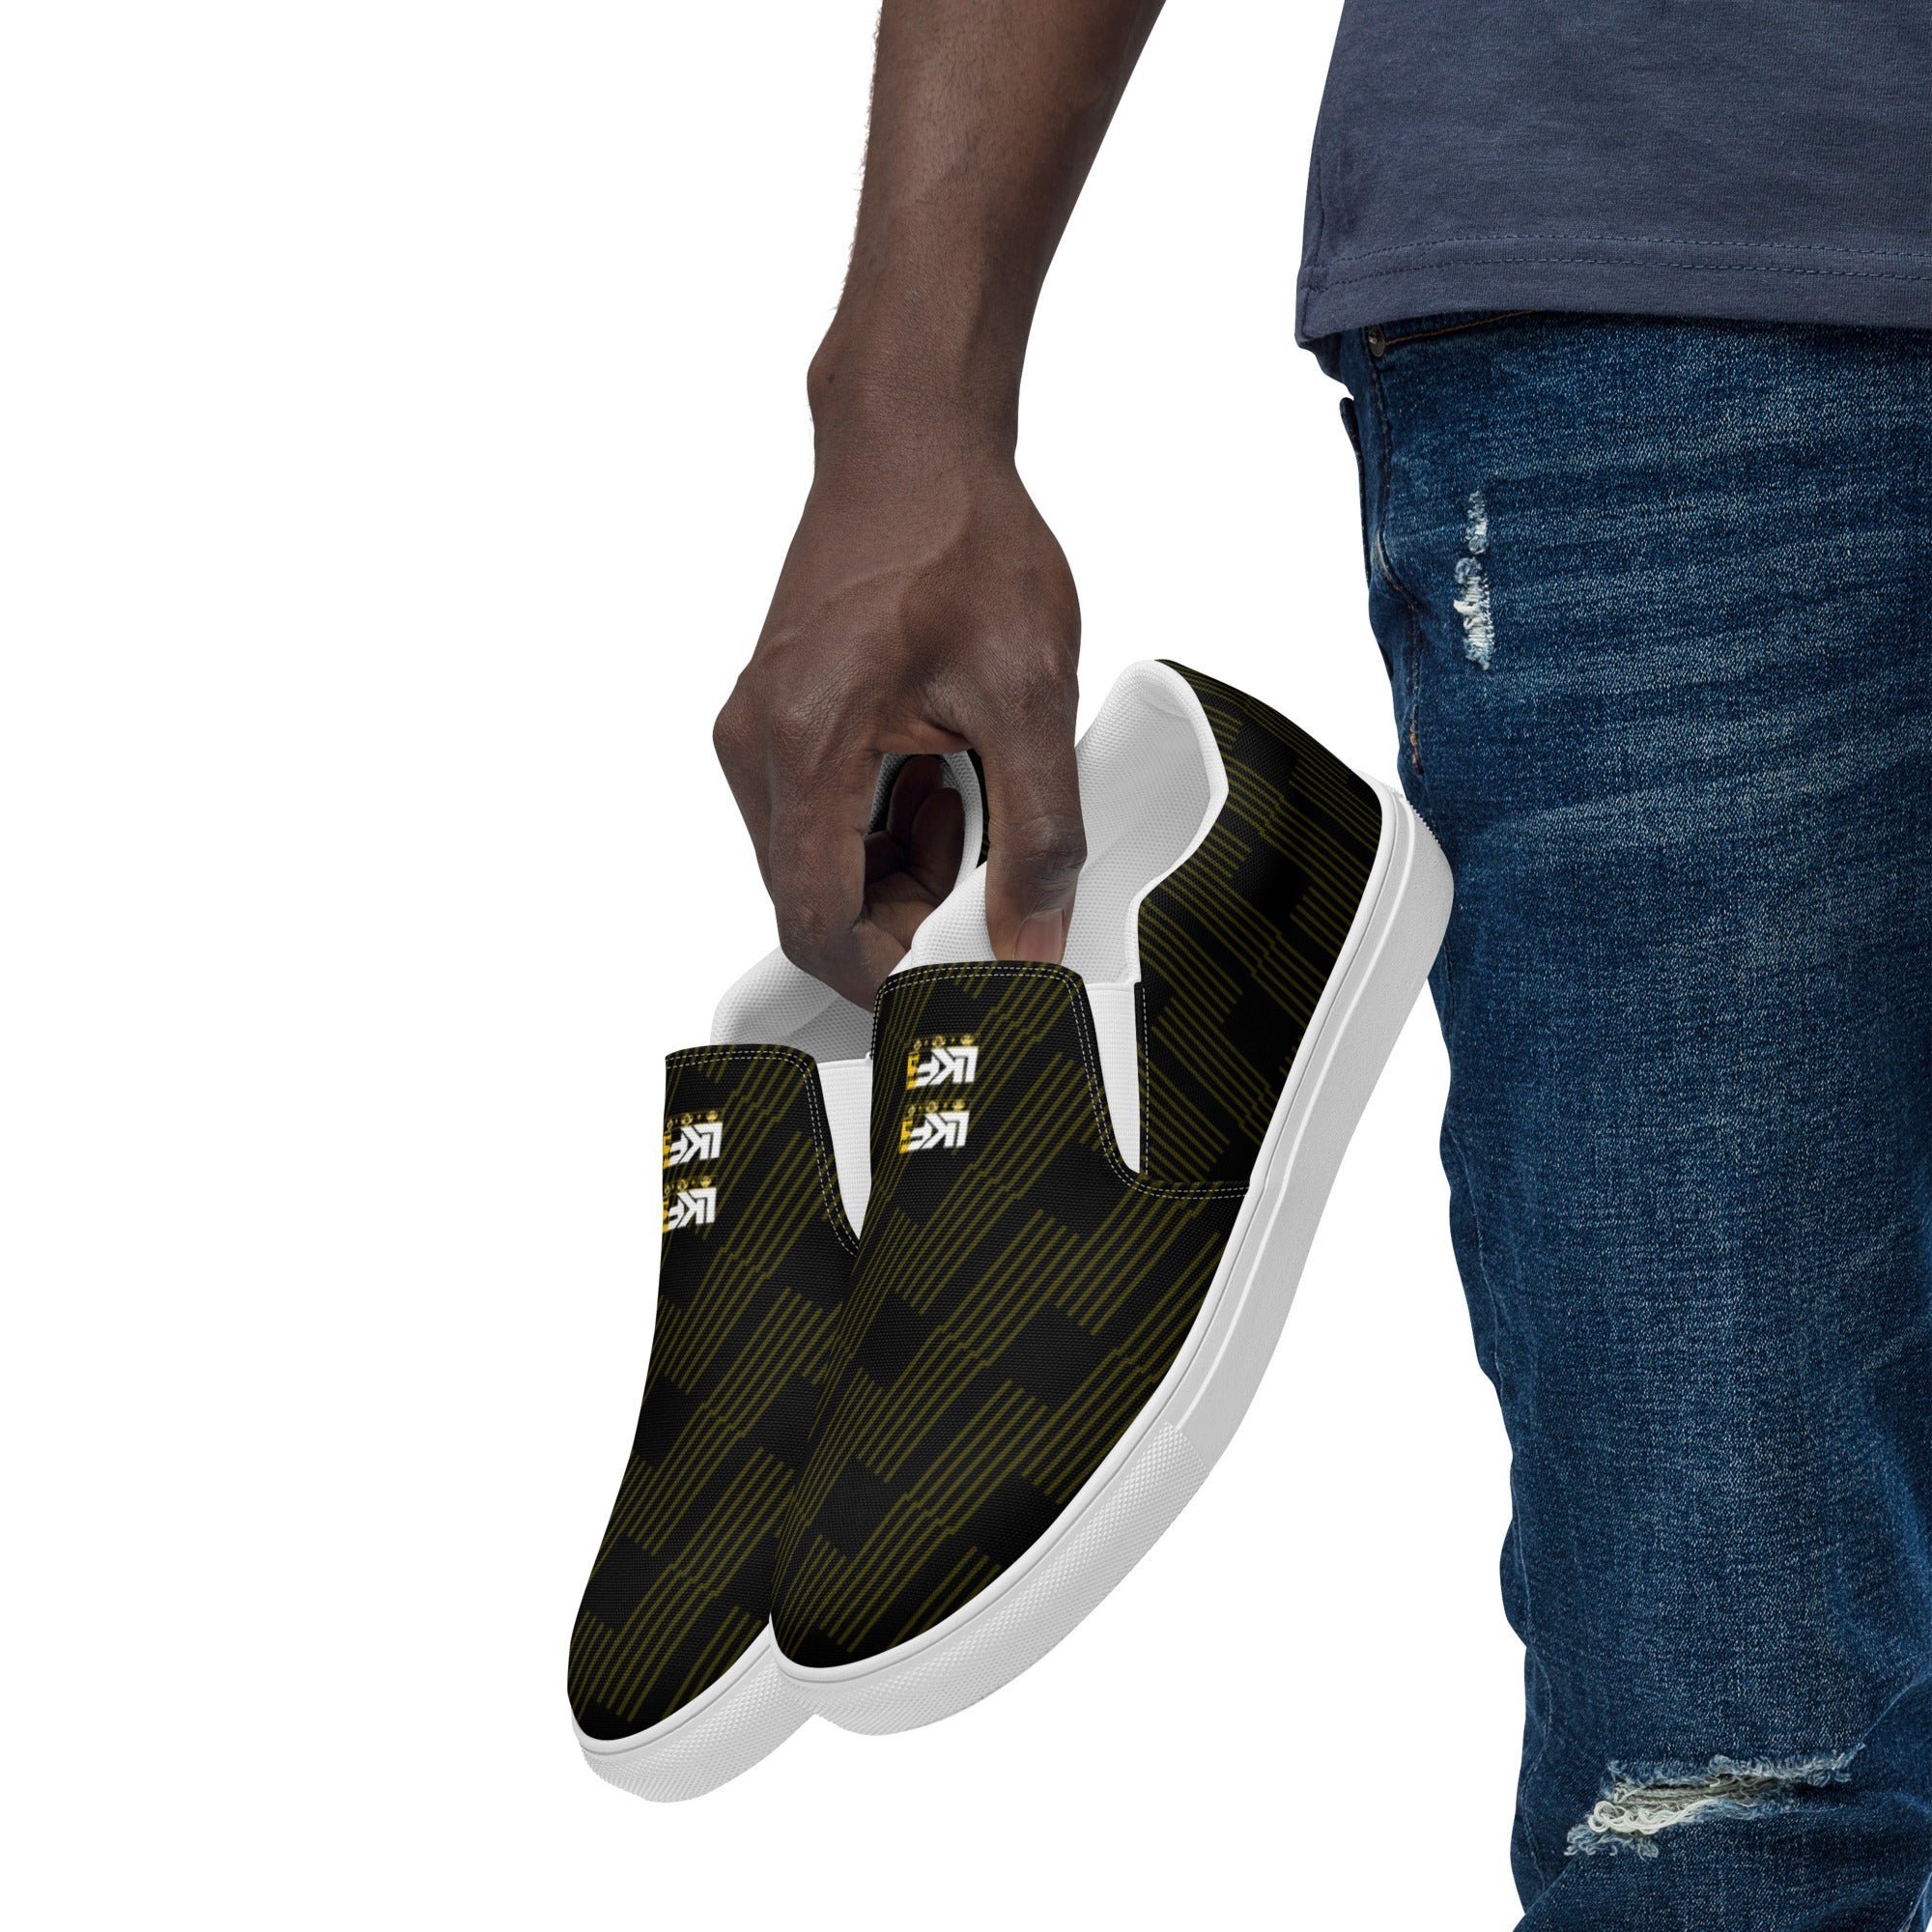 lkf9 Men's slip-on canvas shoes black